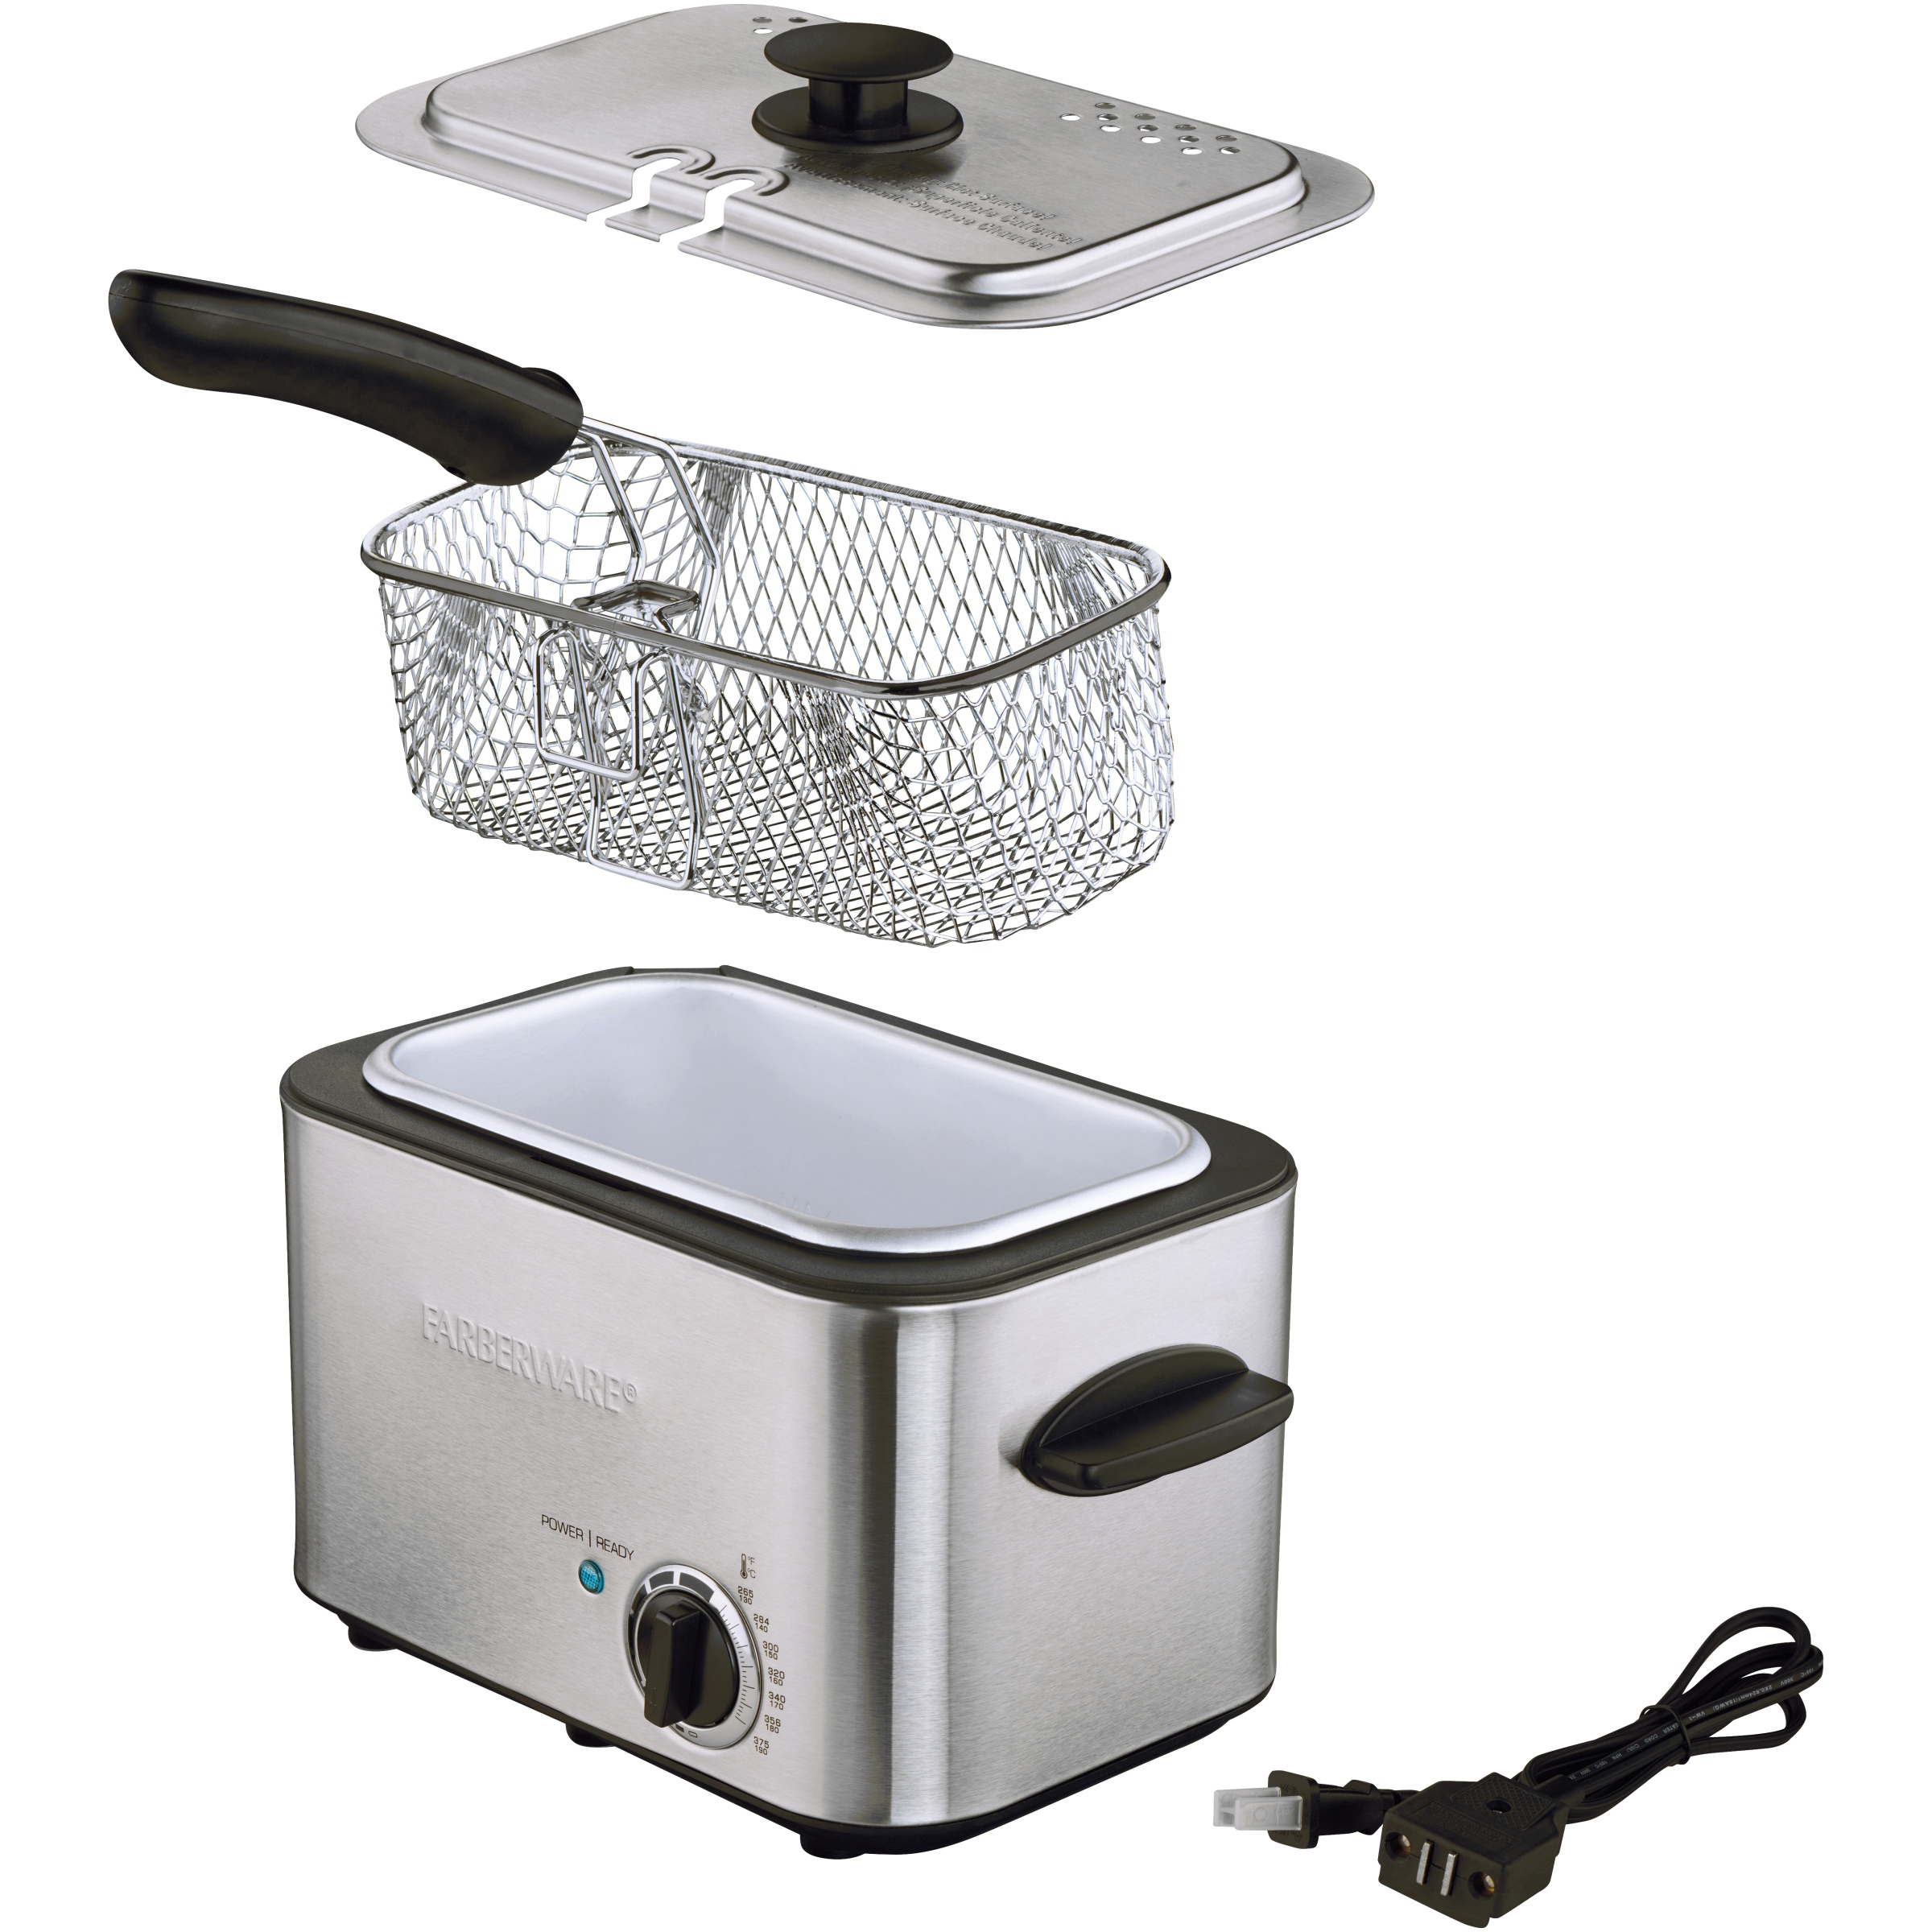 Farberware 1.1 Liter Stainless Steel Deep Fryer with Dishwasher-Safe Basket, Lid & Handle - image 3 of 6